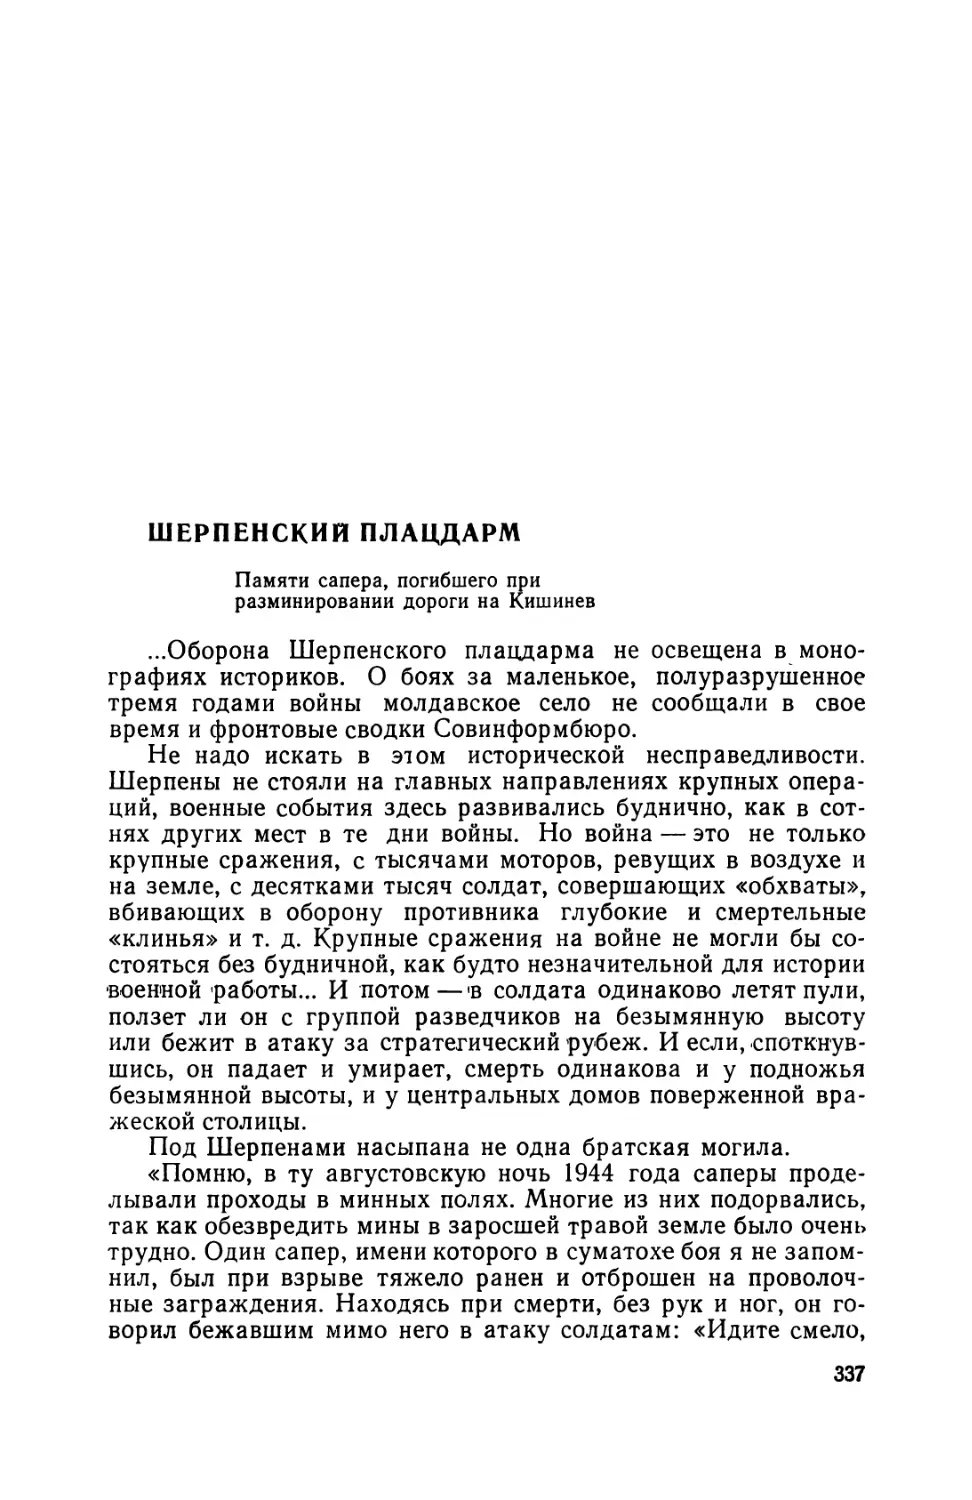 B. Казаков.  Шерпенский  плацдарм